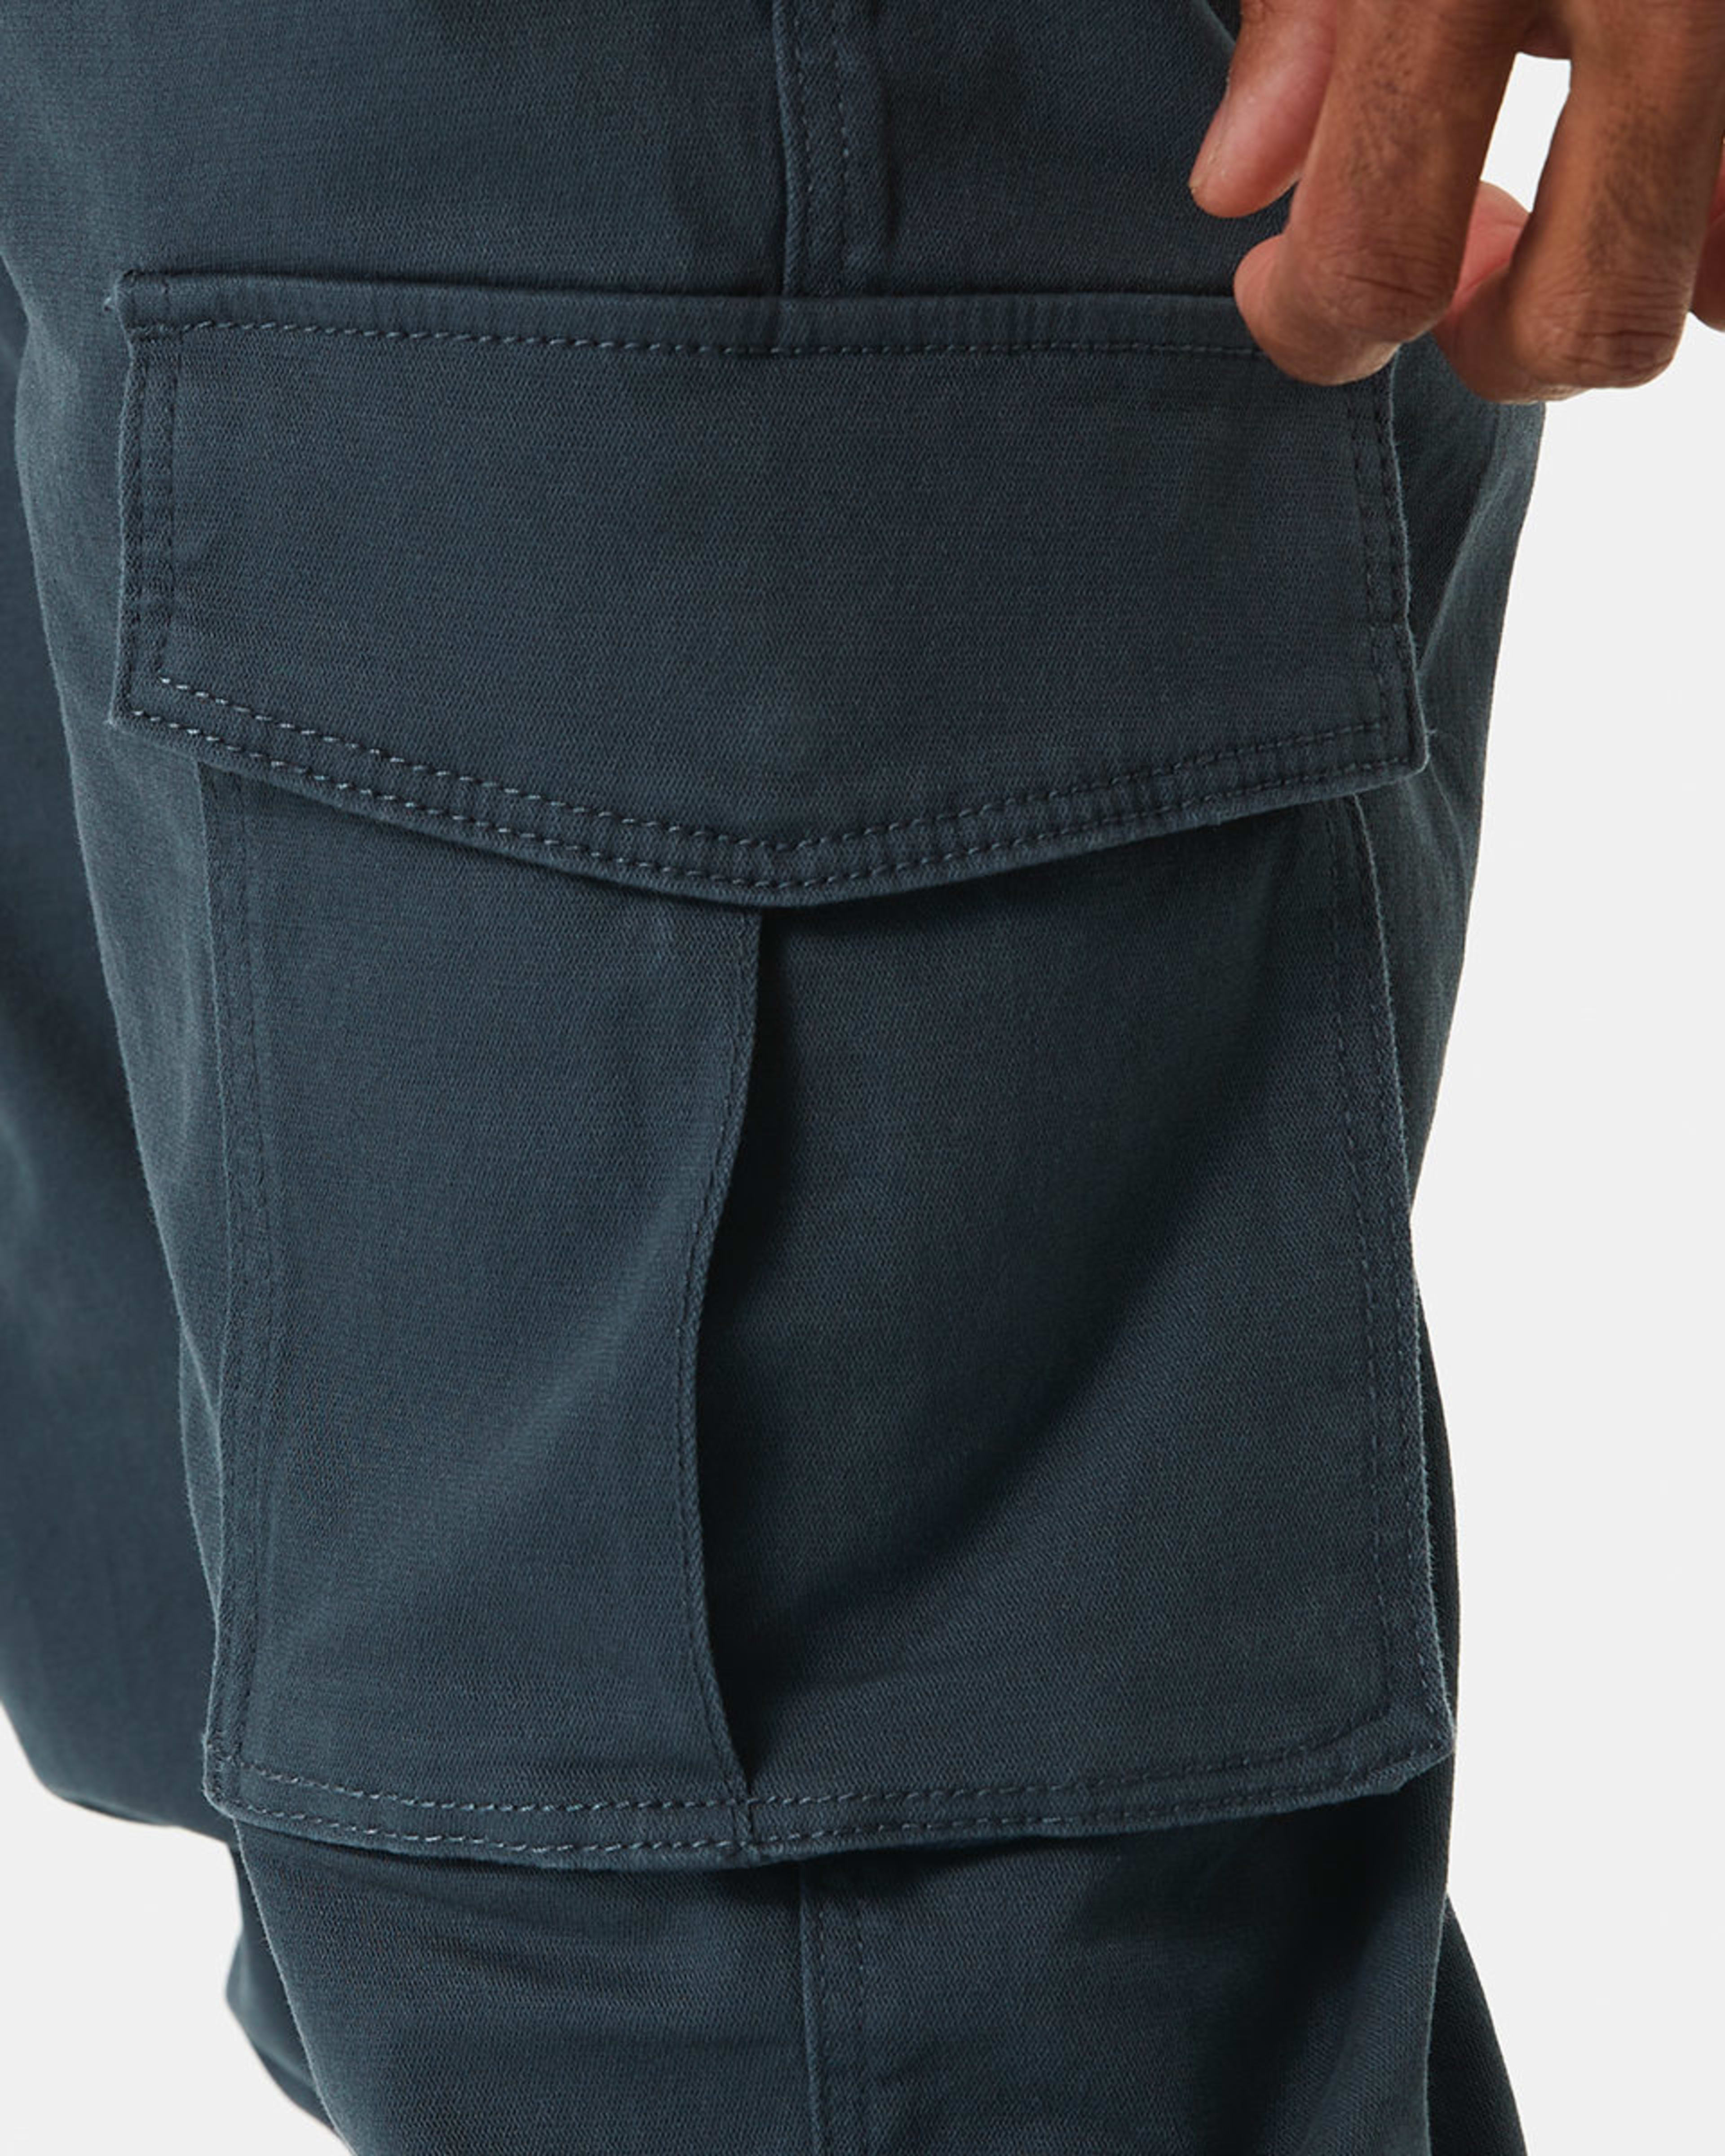 Elastic Waist and Cuffed Cargo Pants - Kmart